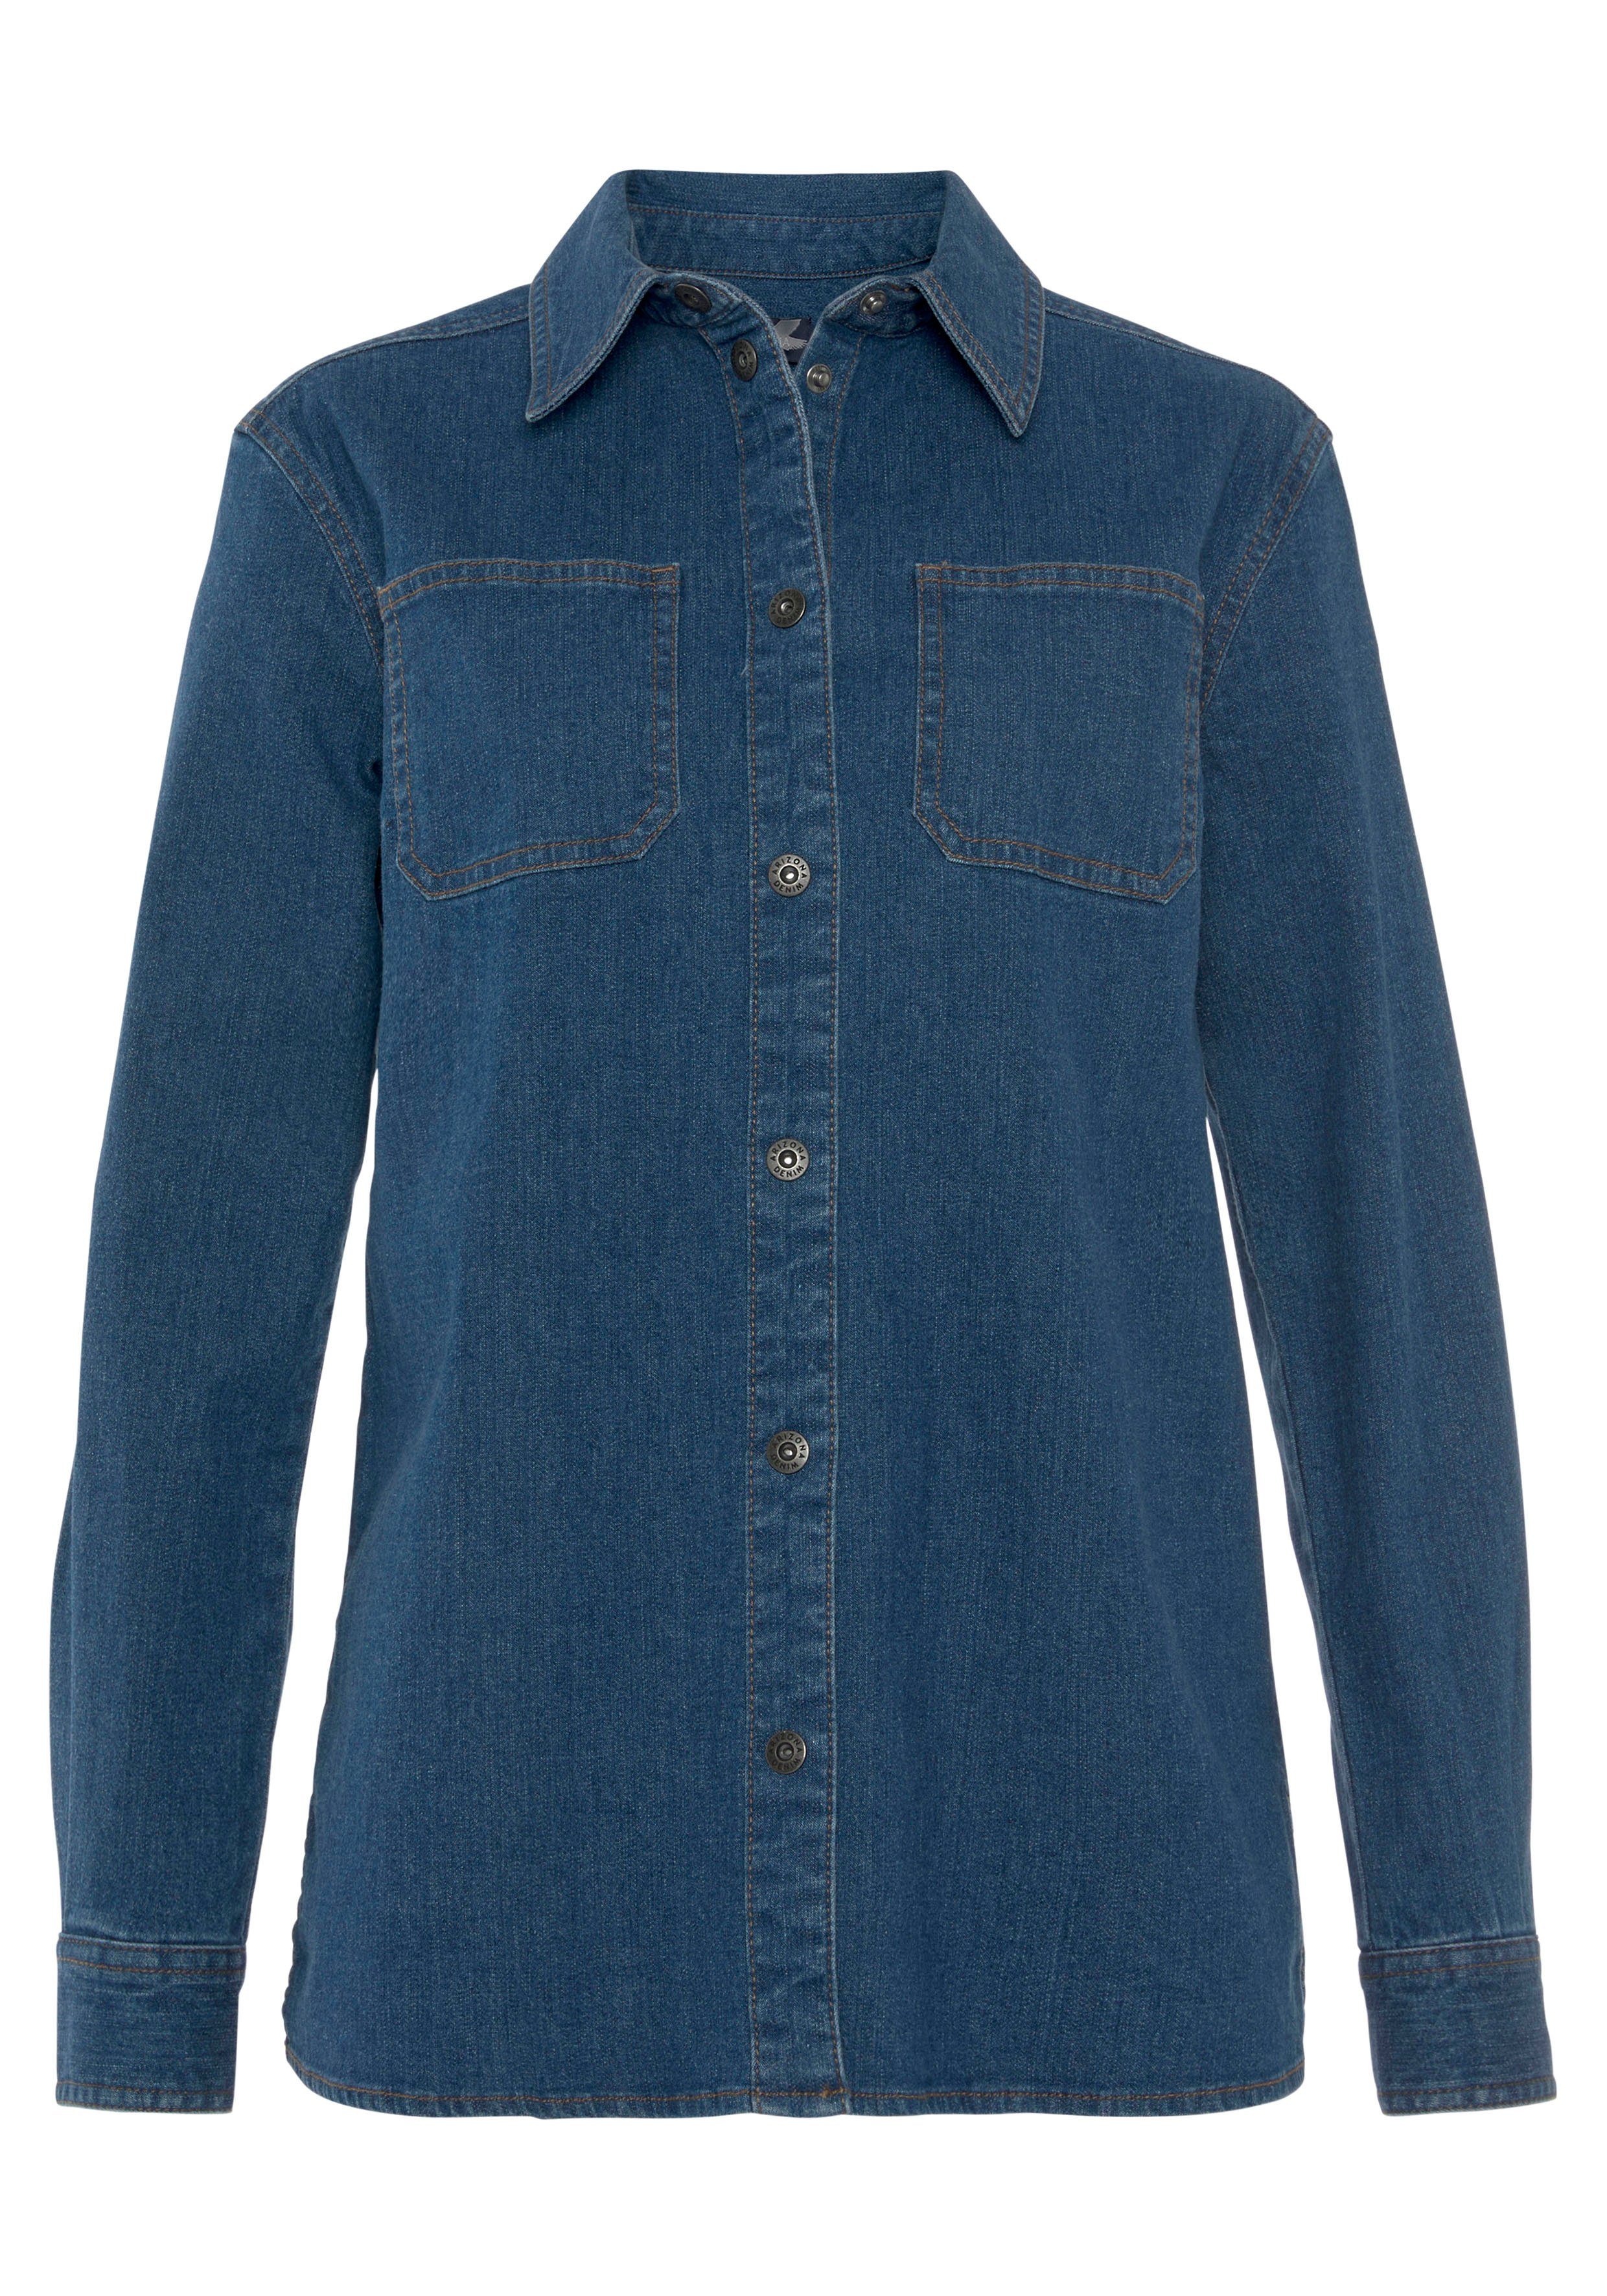 Arizona Jeansjacke Shacket dark Hemdjacke geschnitten - Denim blue Weiter used